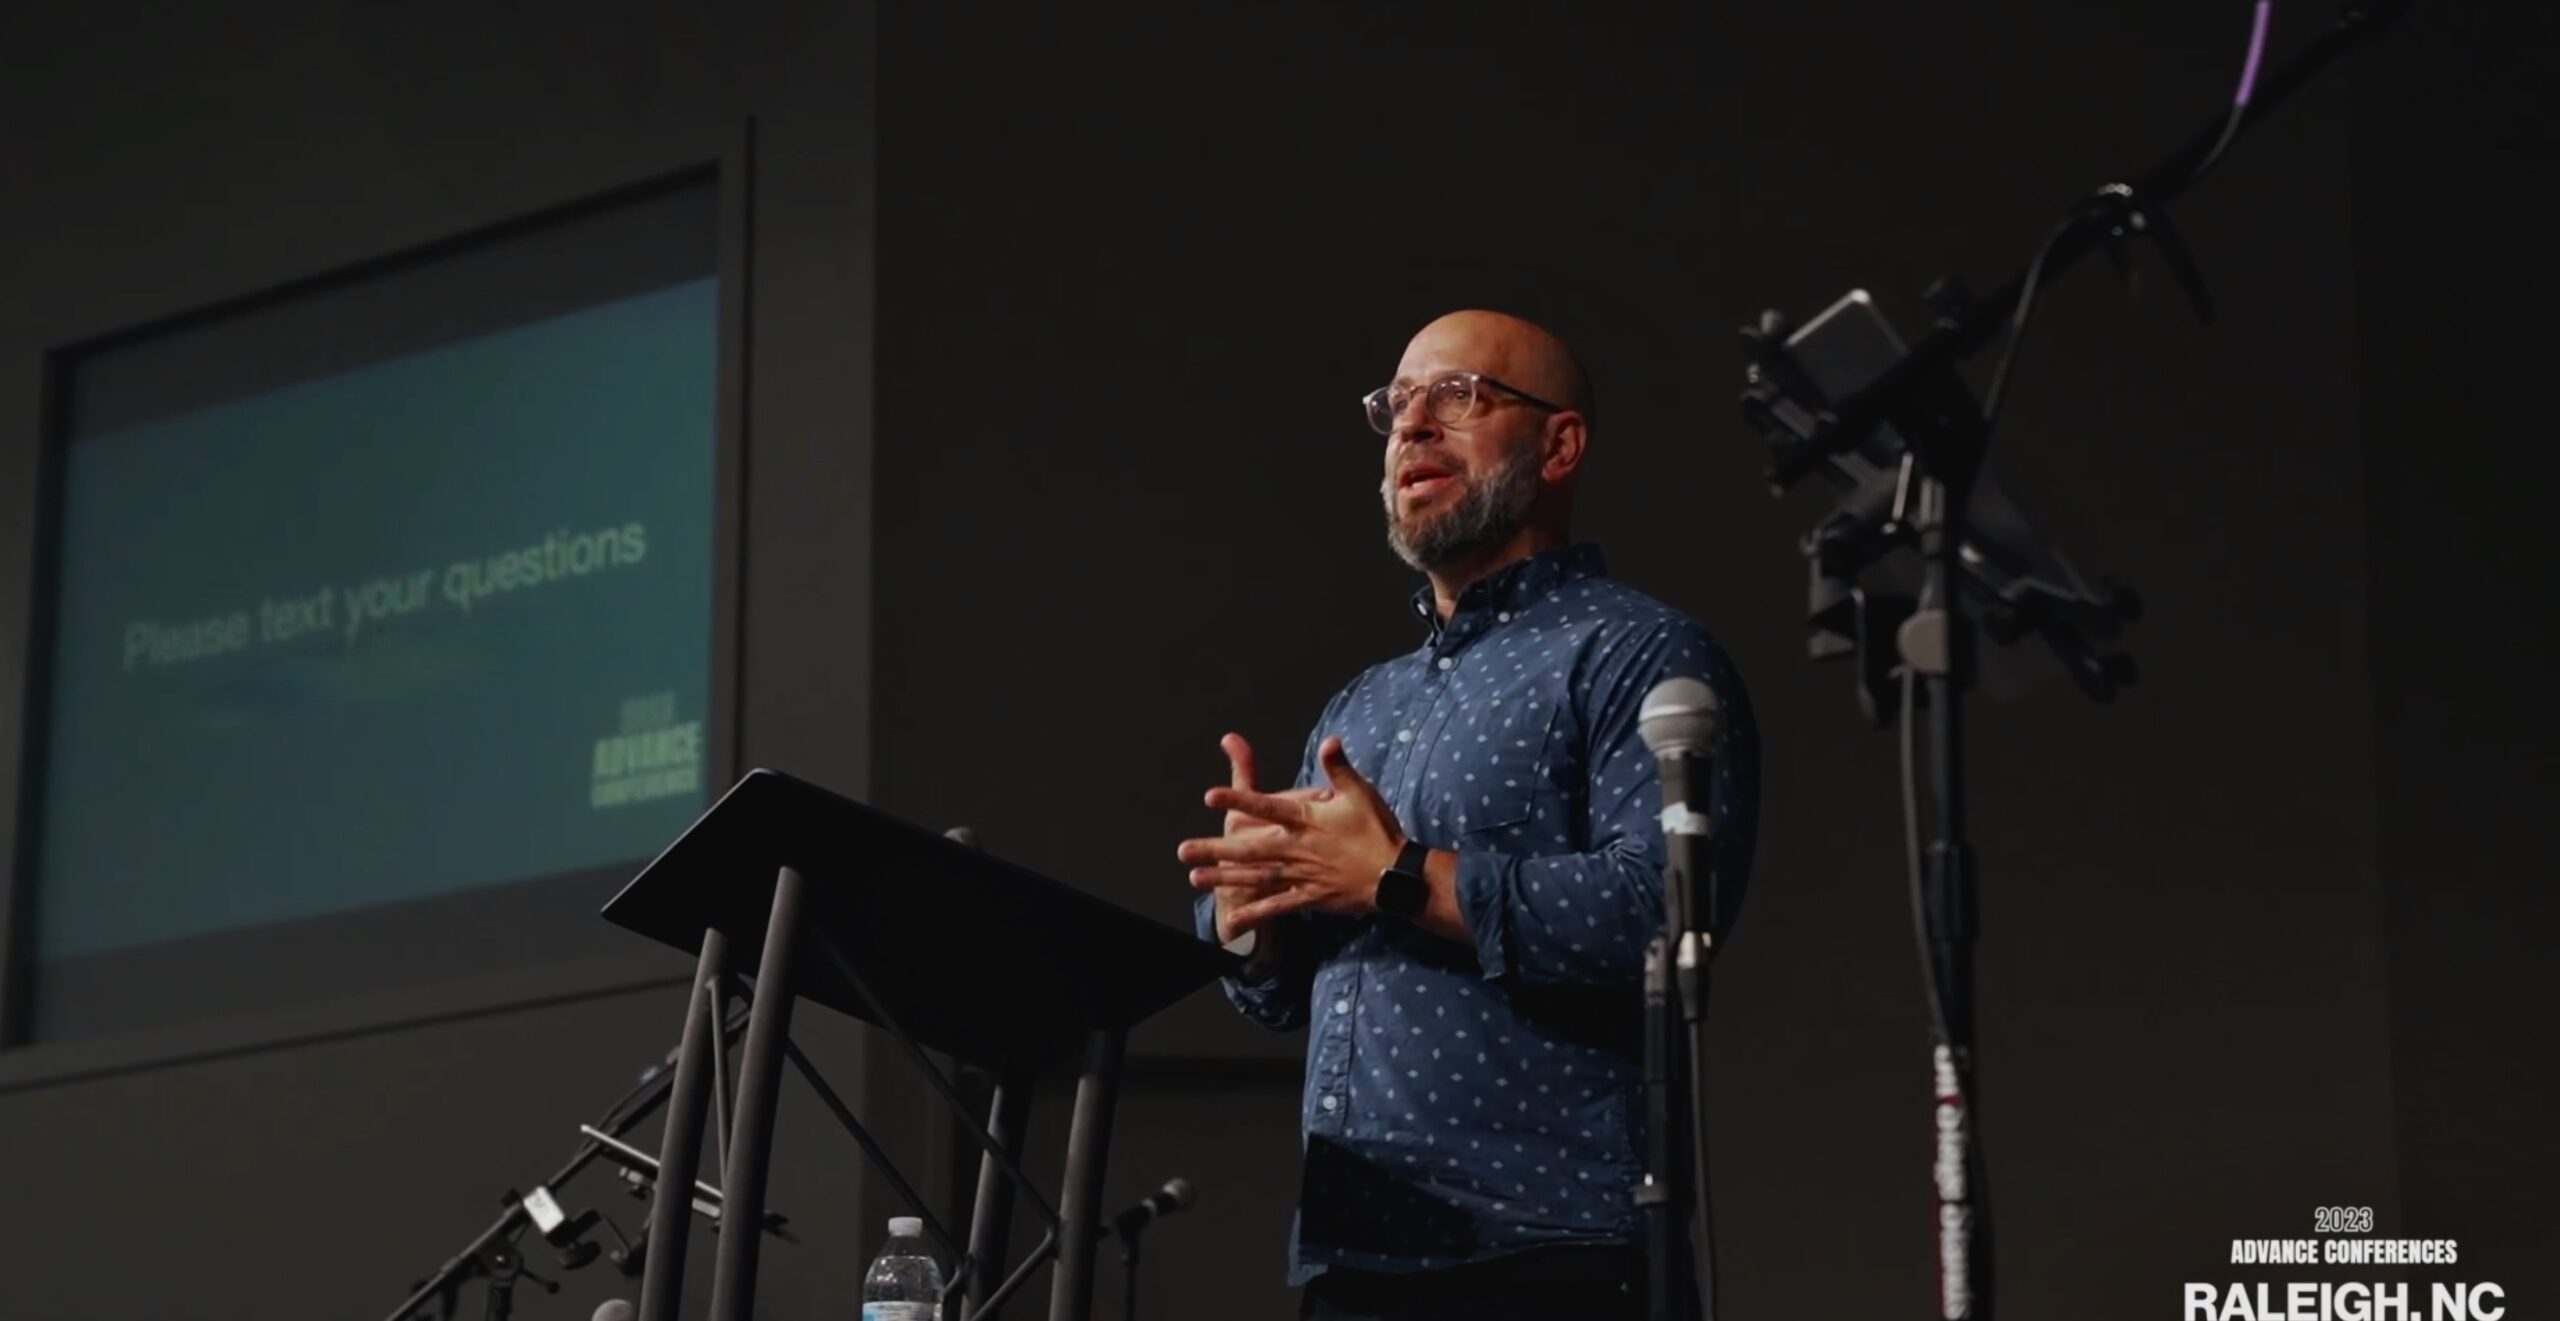 Tony Merida on the Future of Preaching